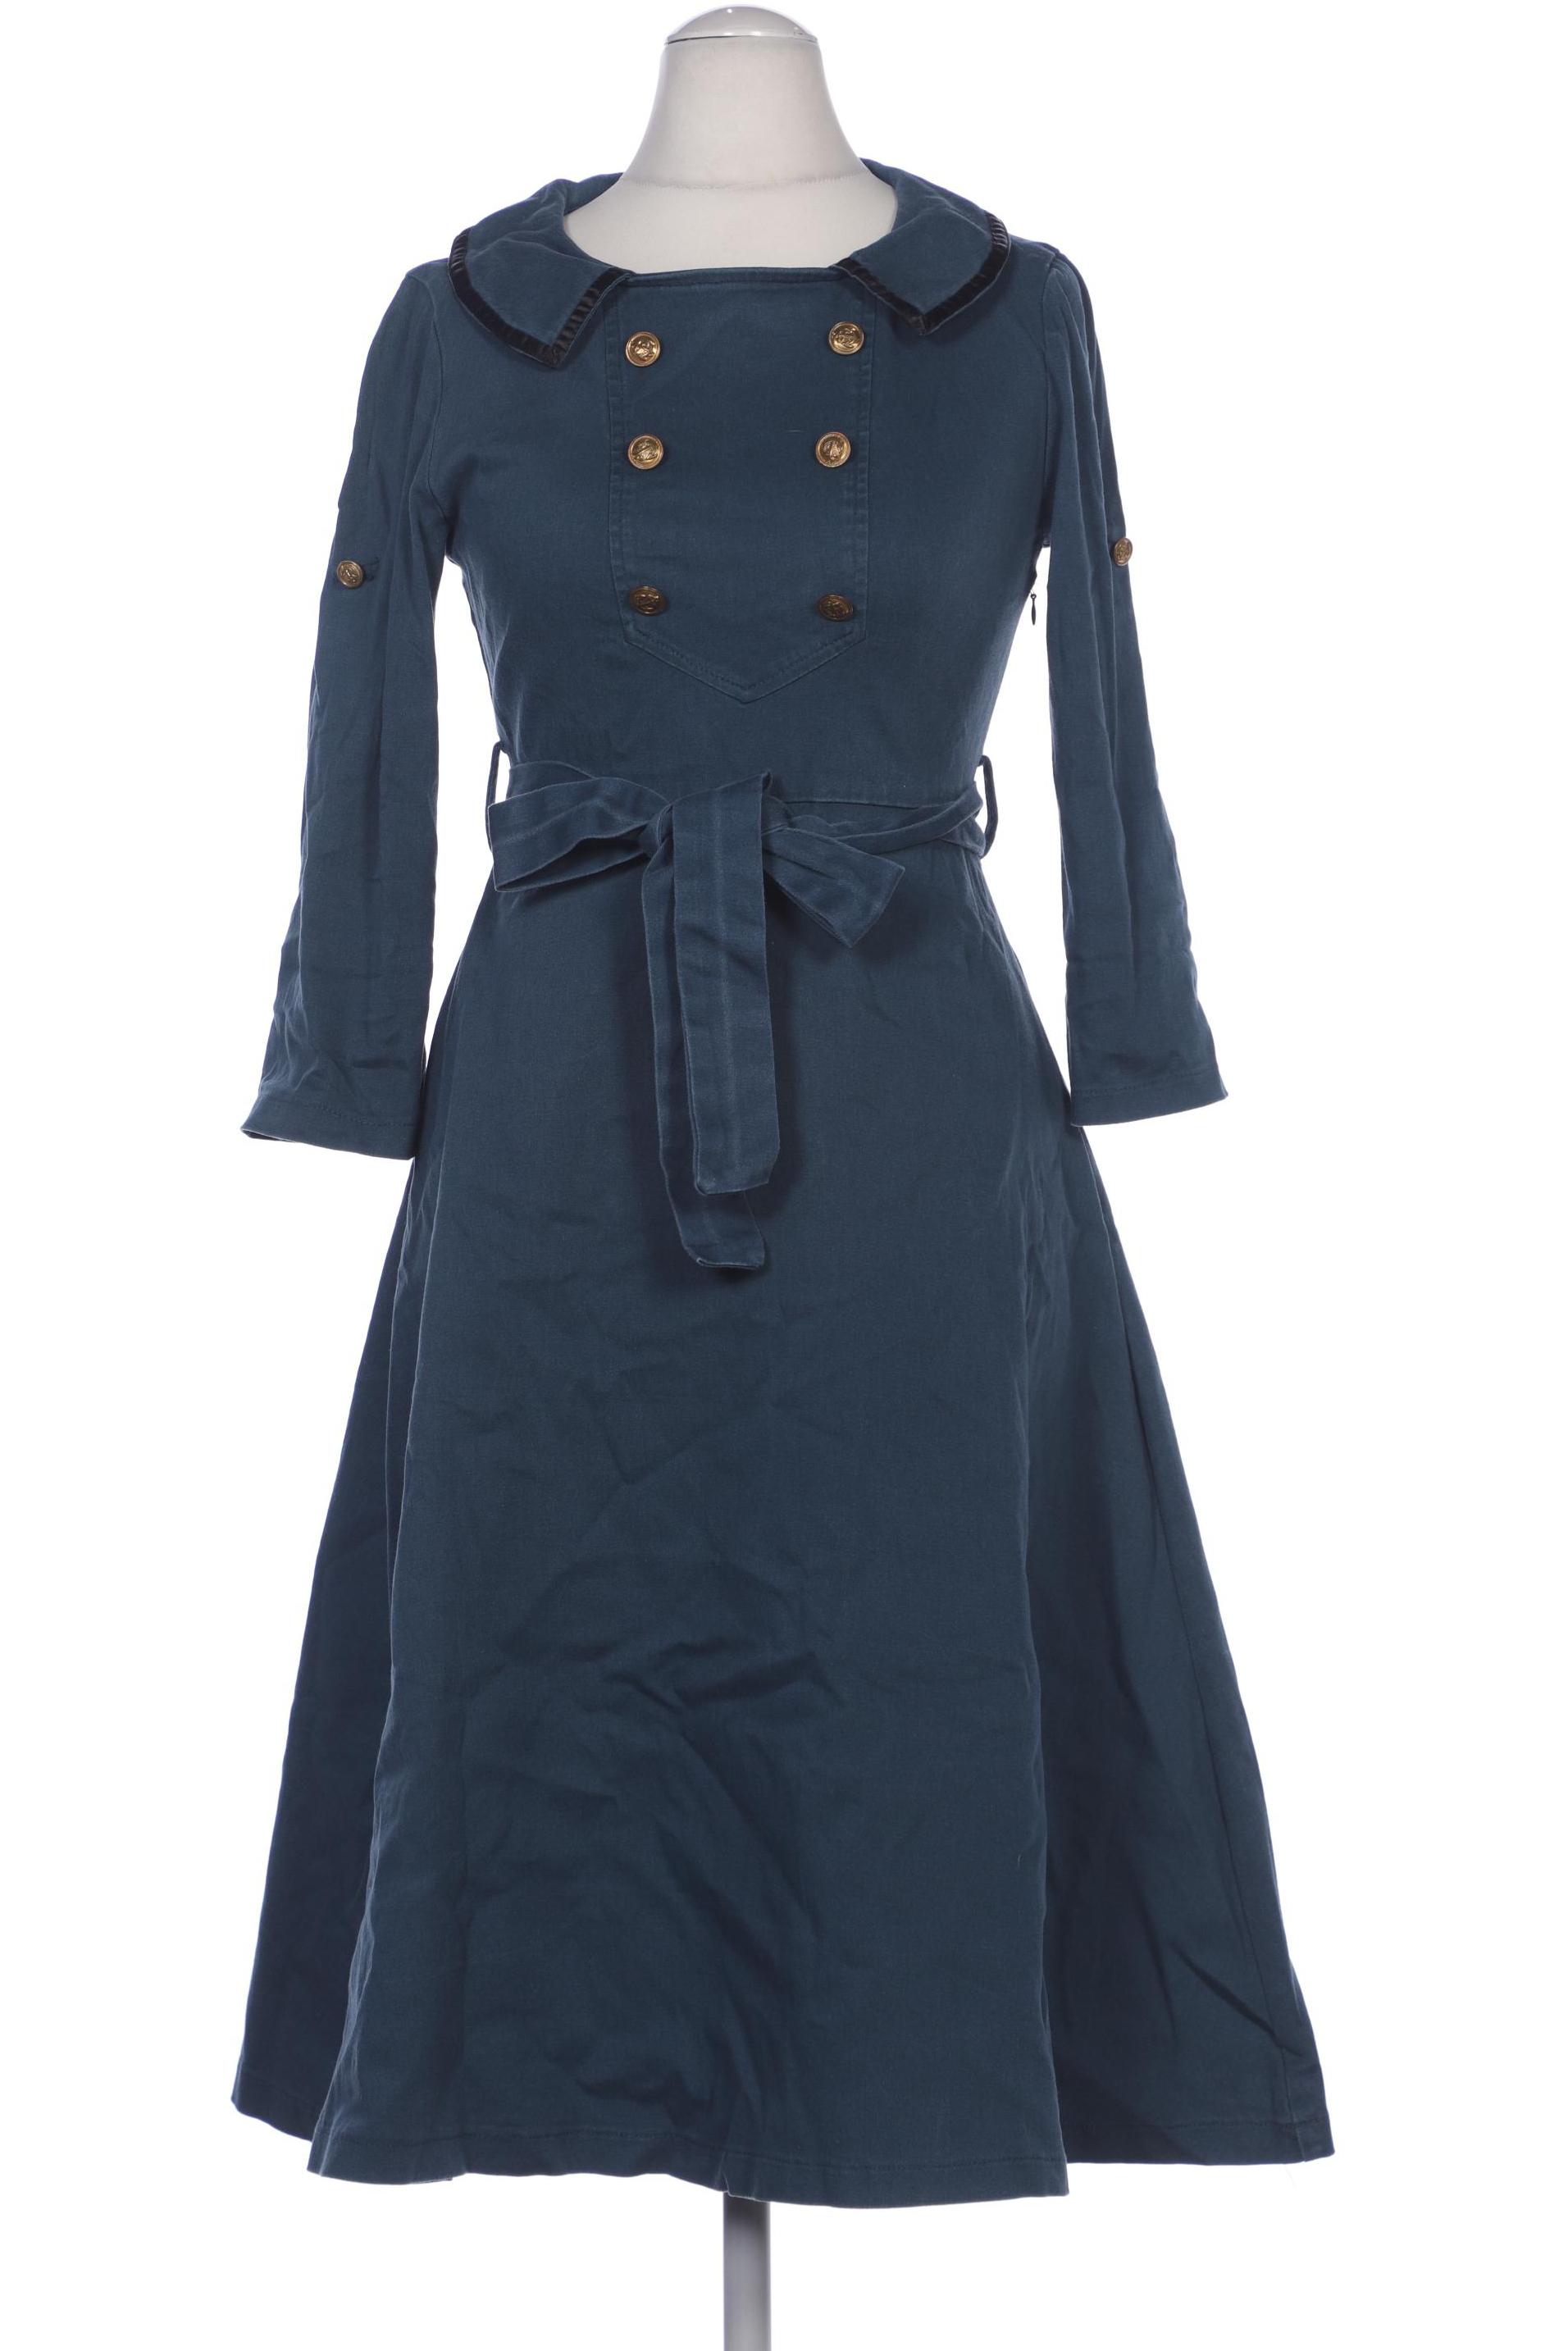 Lindy Bop Damen Kleid, blau, Gr. 36 von lindy bop